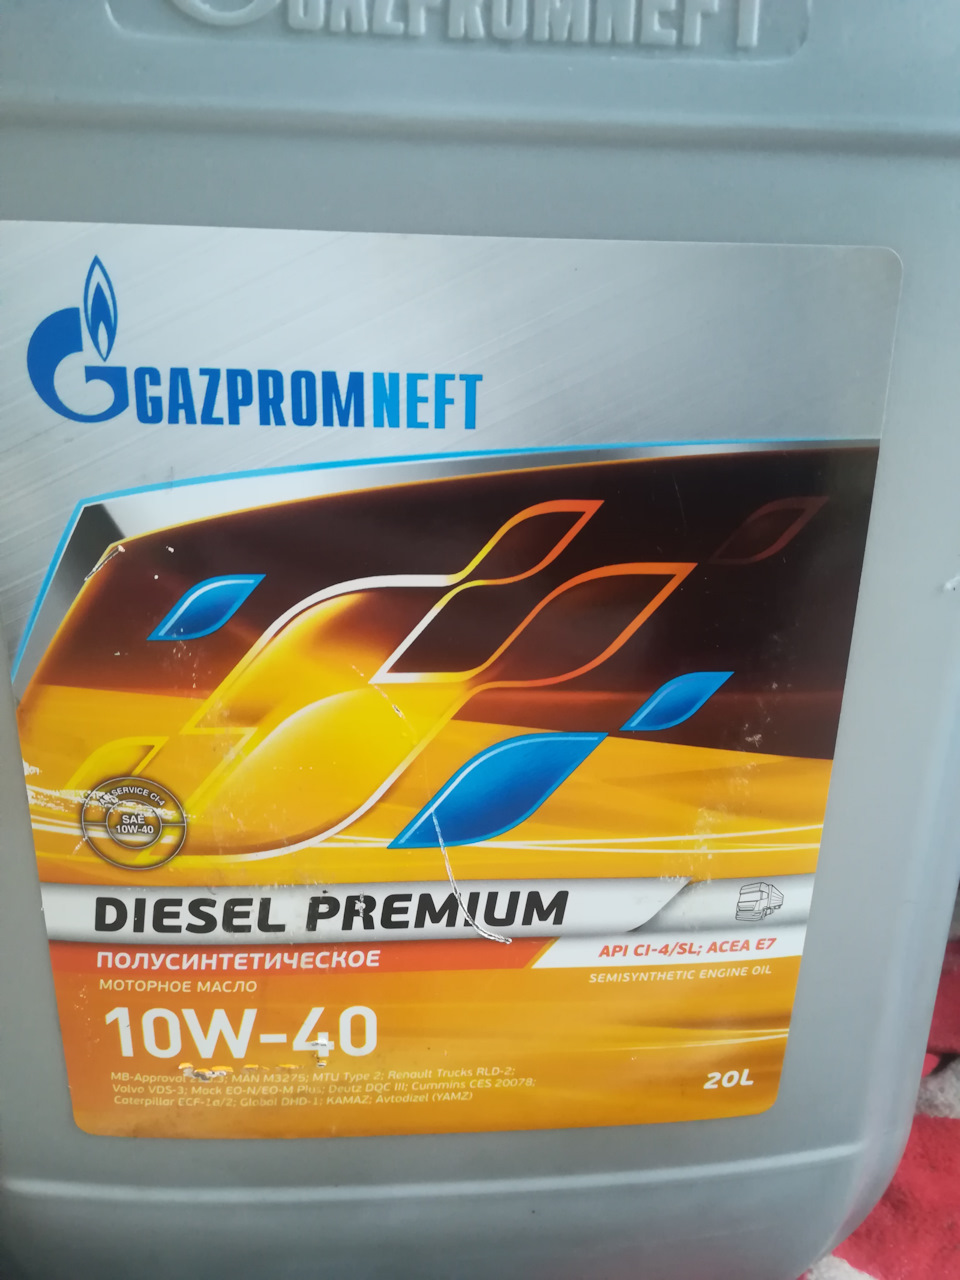 Газпромнефть дизель премиум 10w 40. Diesel Premium 10w-40 CL-4. Gazpromneft Diesel Premium 10w-40 одобрение КАМАЗ. Масло дизель премиум 10w 40